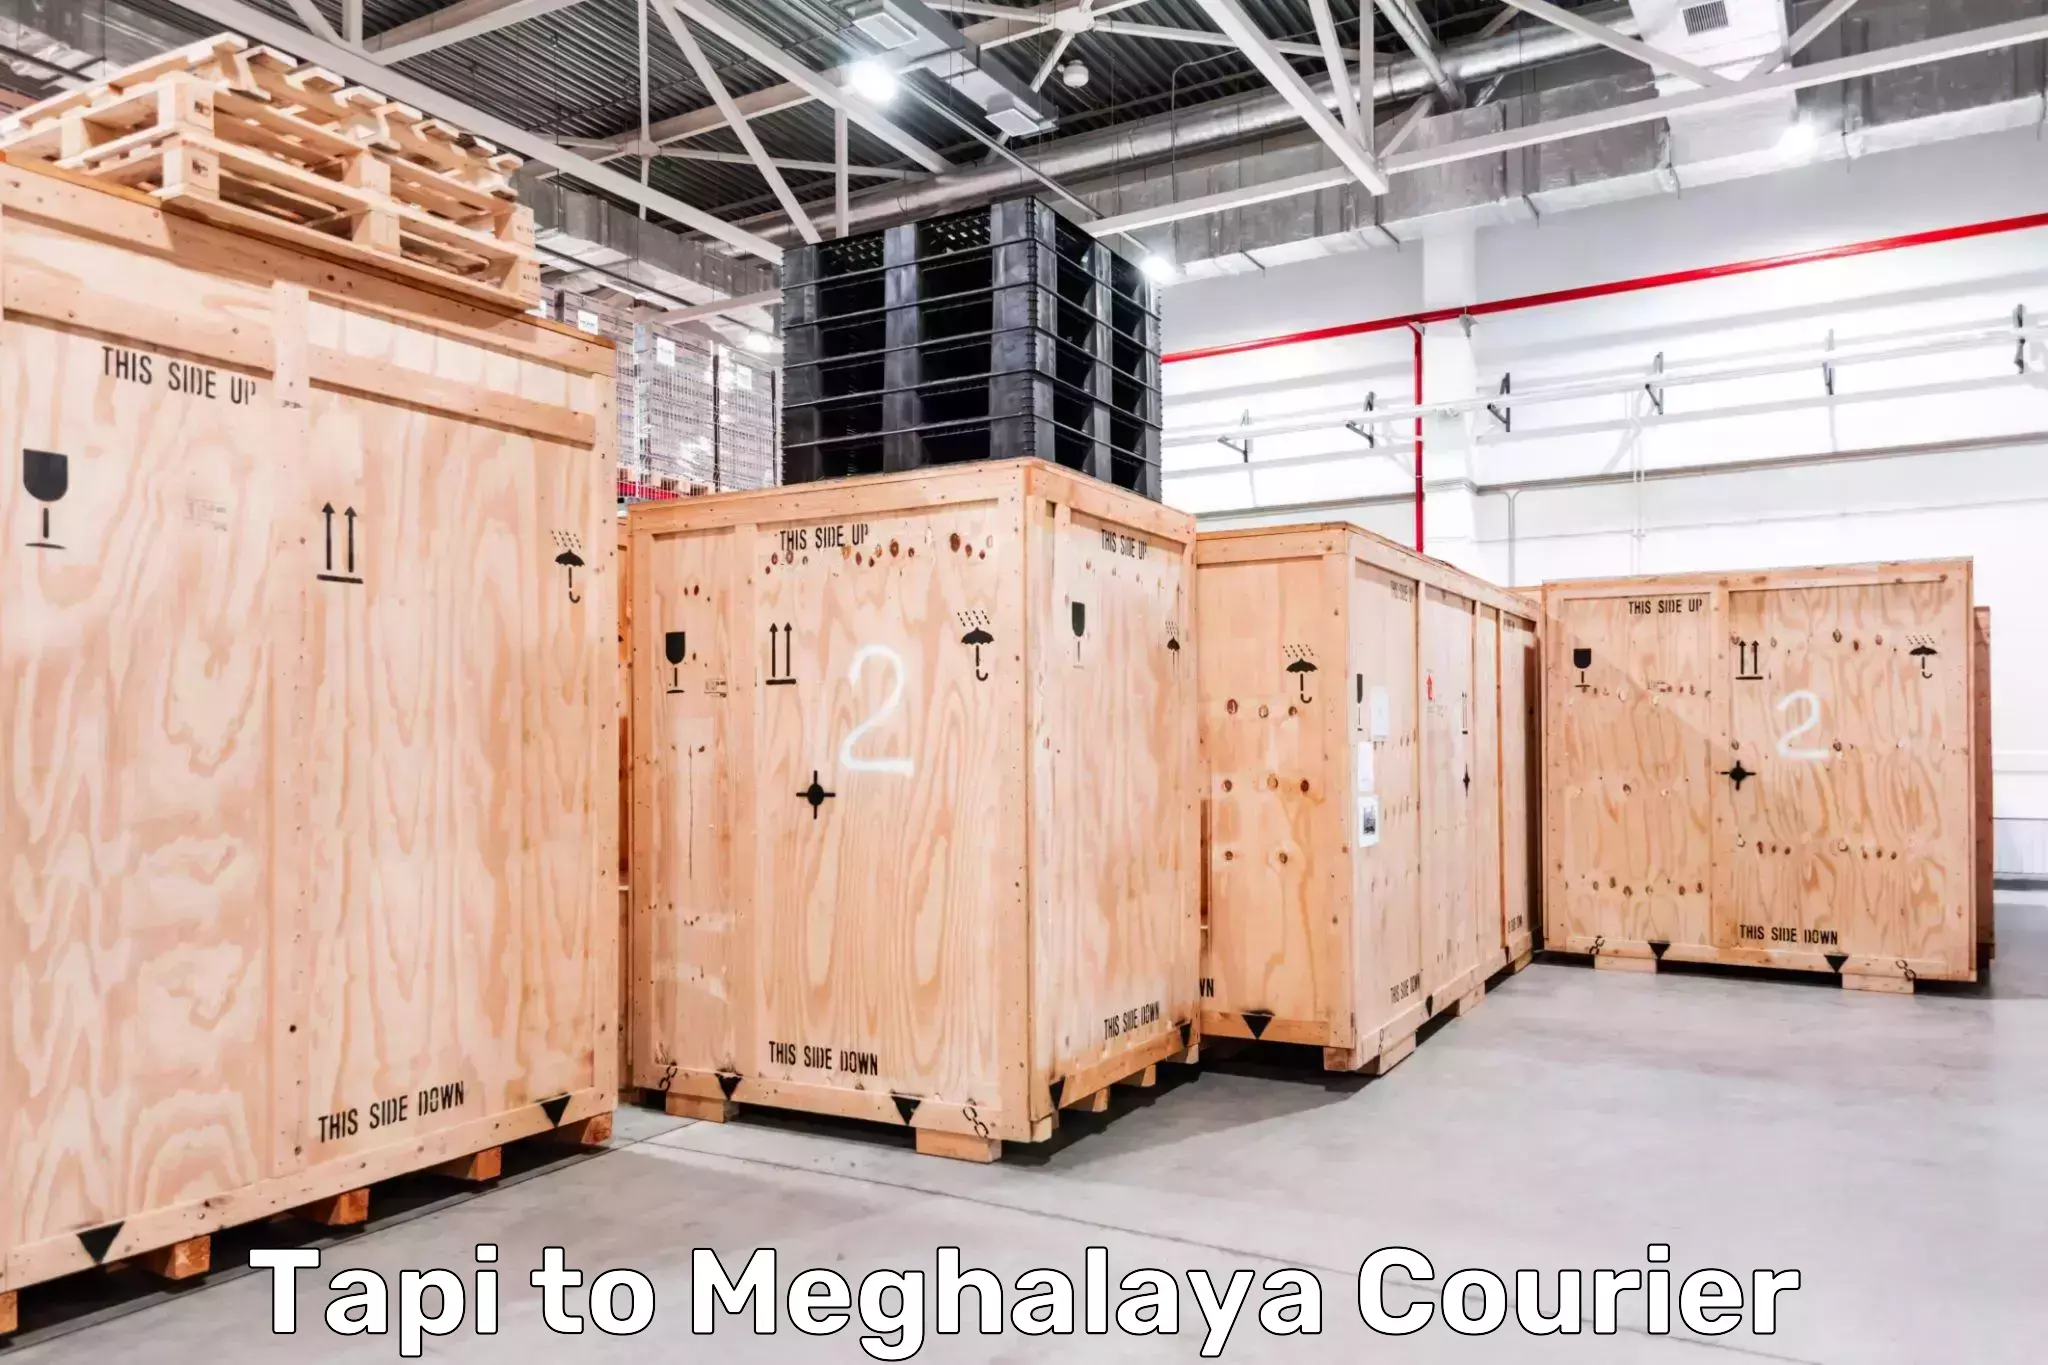 Global logistics network Tapi to Meghalaya